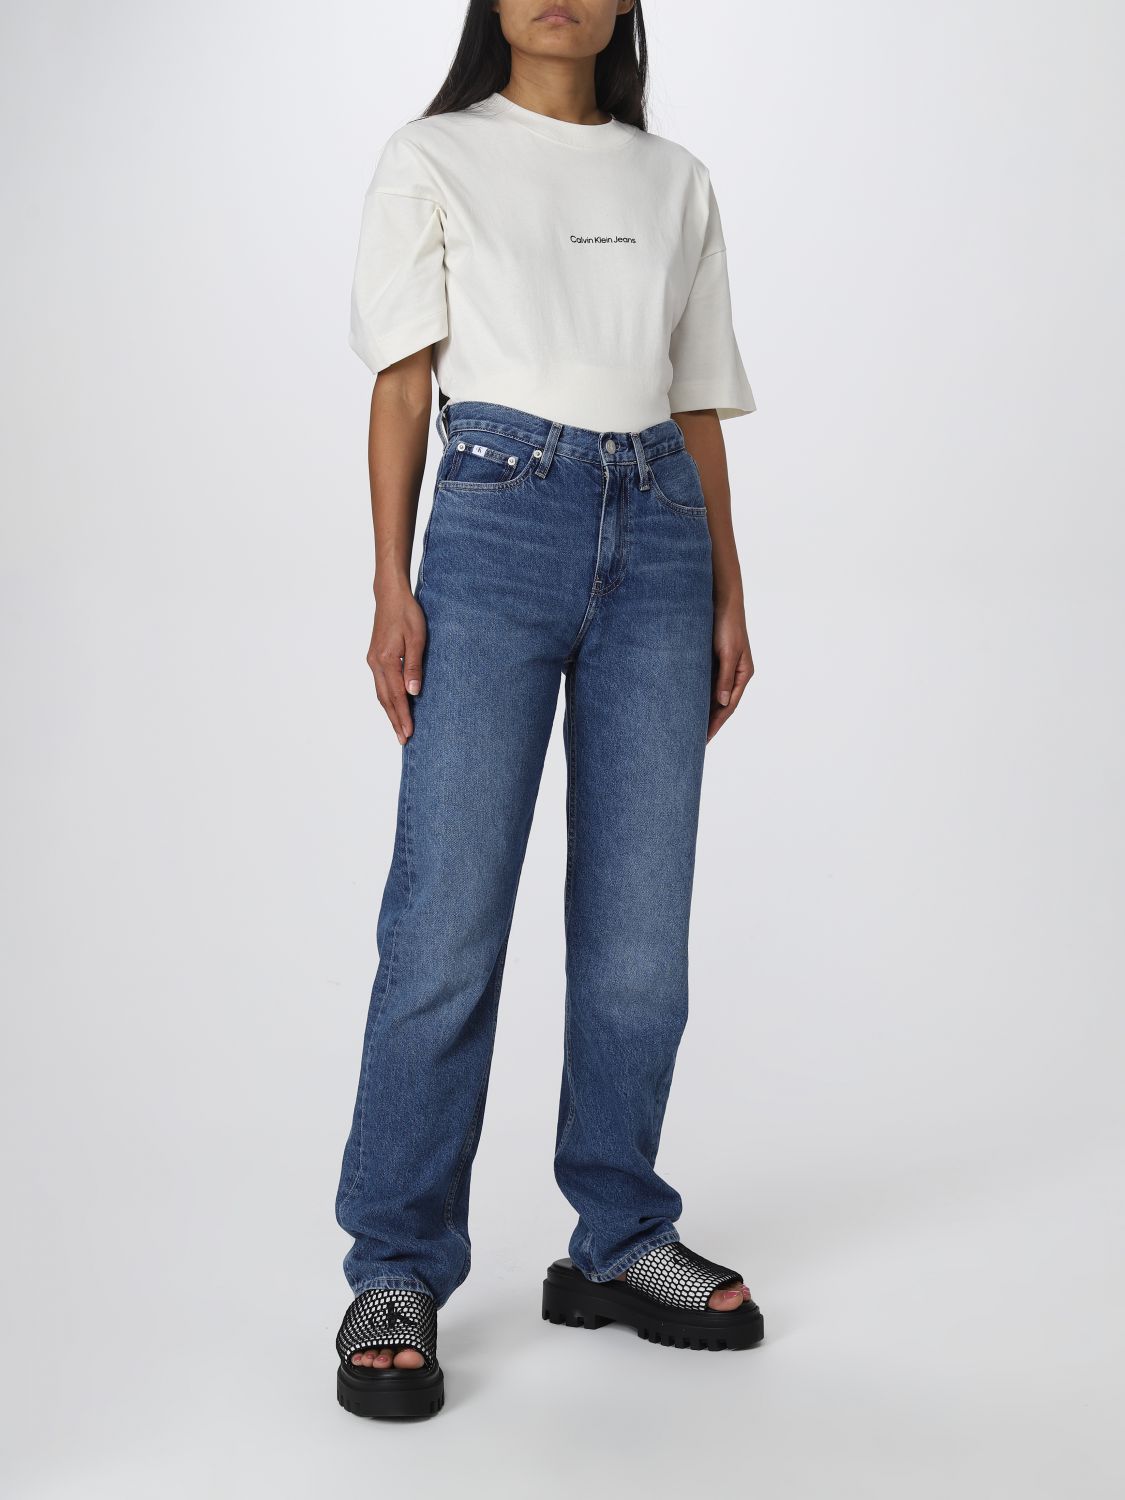 CALVIN KLEIN JEANS: jeans for woman - Denim | Calvin Klein Jeans jeans  J20J220206 online on 